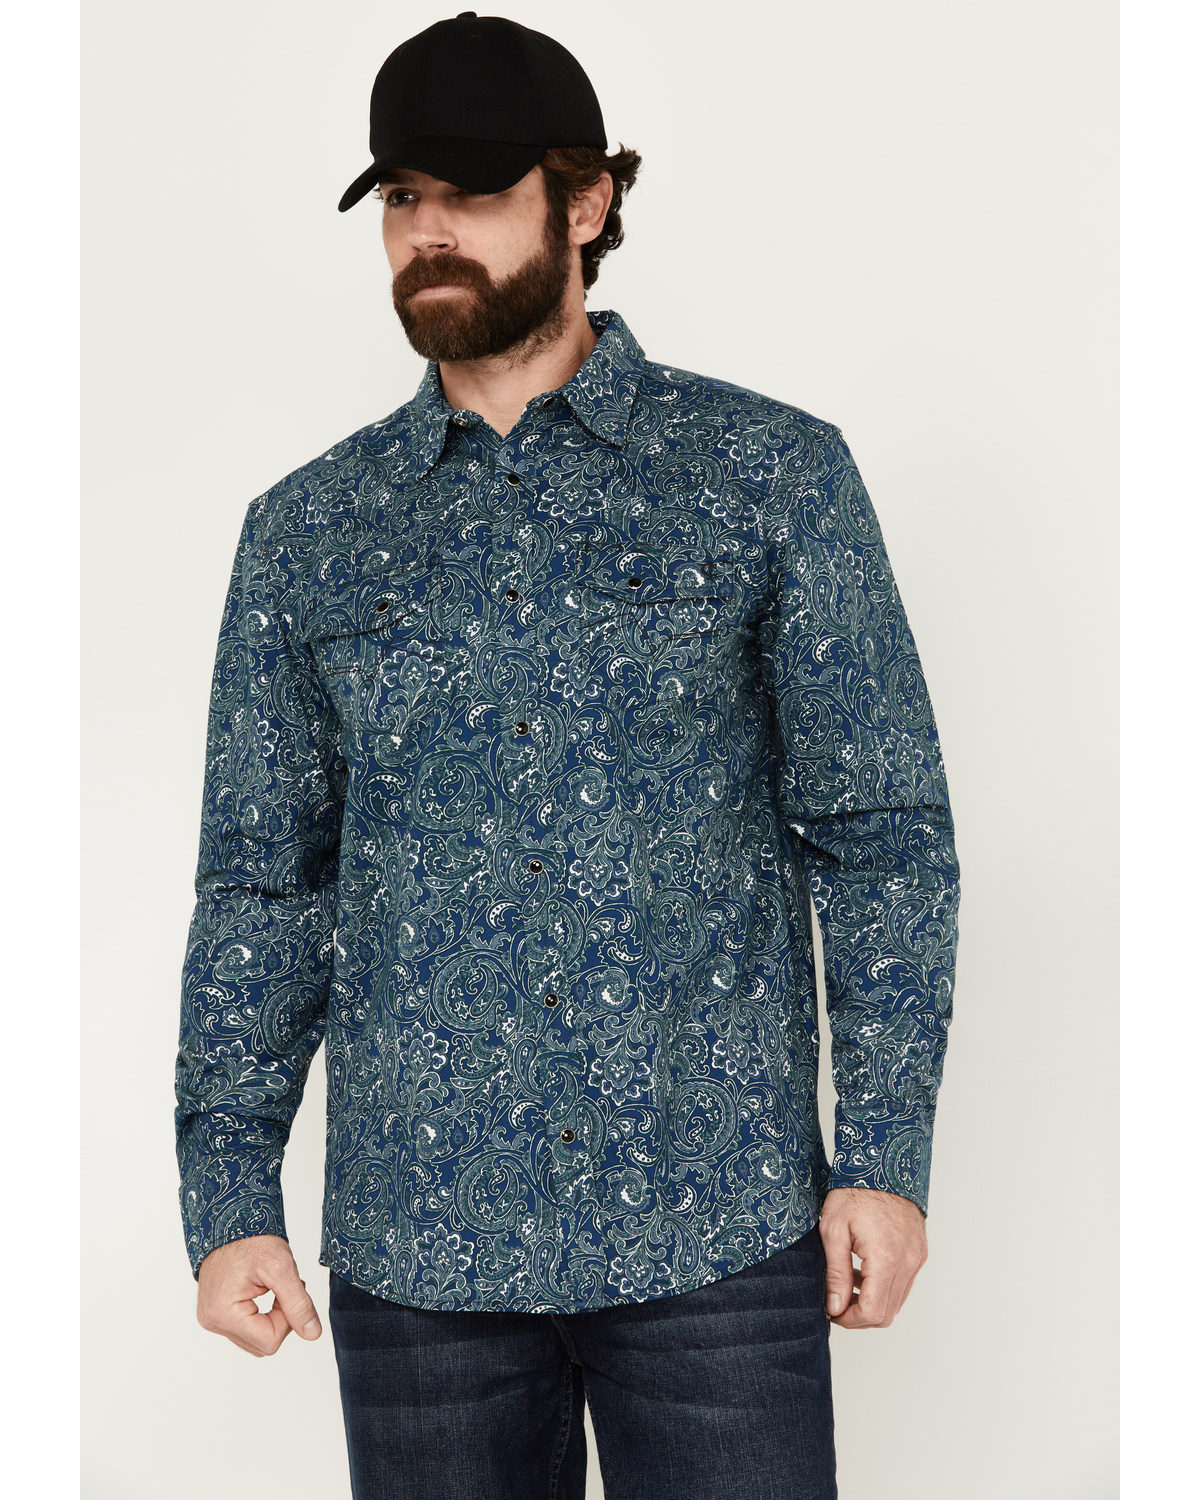 Cody James Men's FR Printed Lightweight Long Sleeve Snap Western Work Shirt